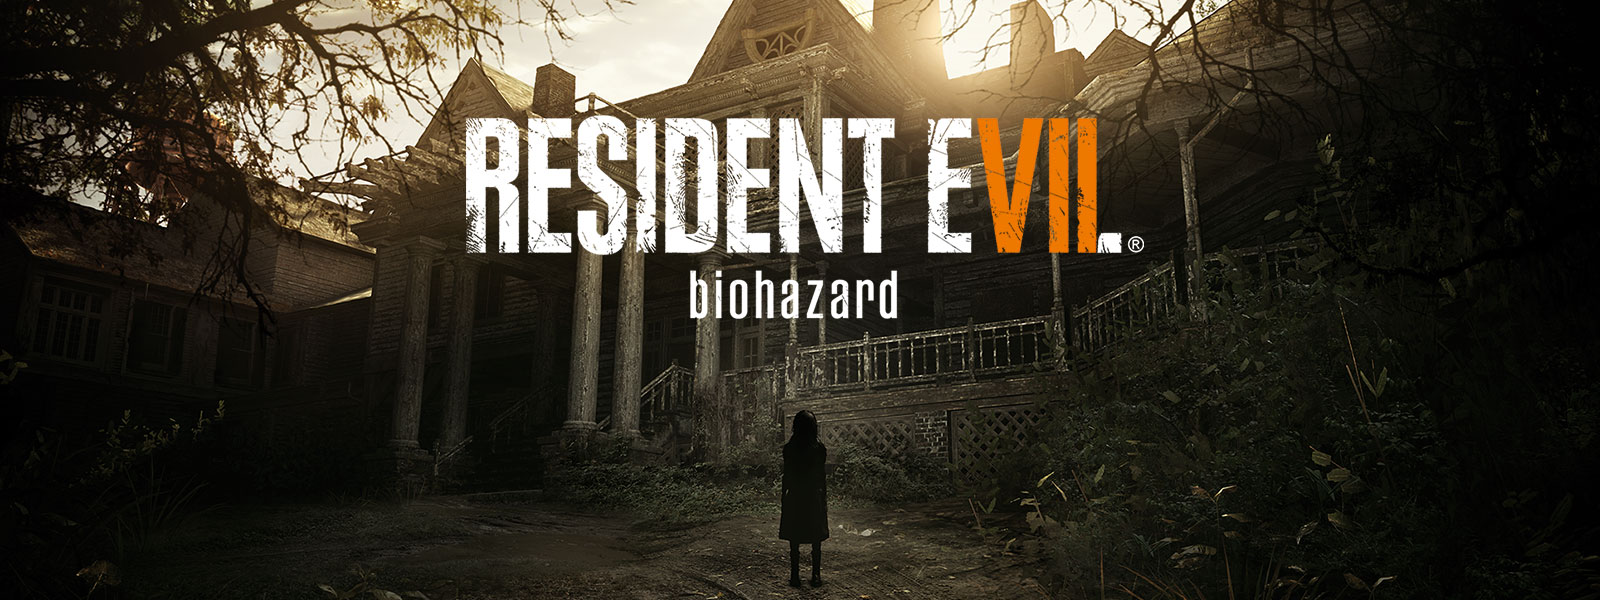 Box shot του Resident Evil 7 biohazard gold edition, σκηνή με ένα μικρό κορίτσι να στέκεται μπροστά από ένα στοιχειωμένο σπίτι